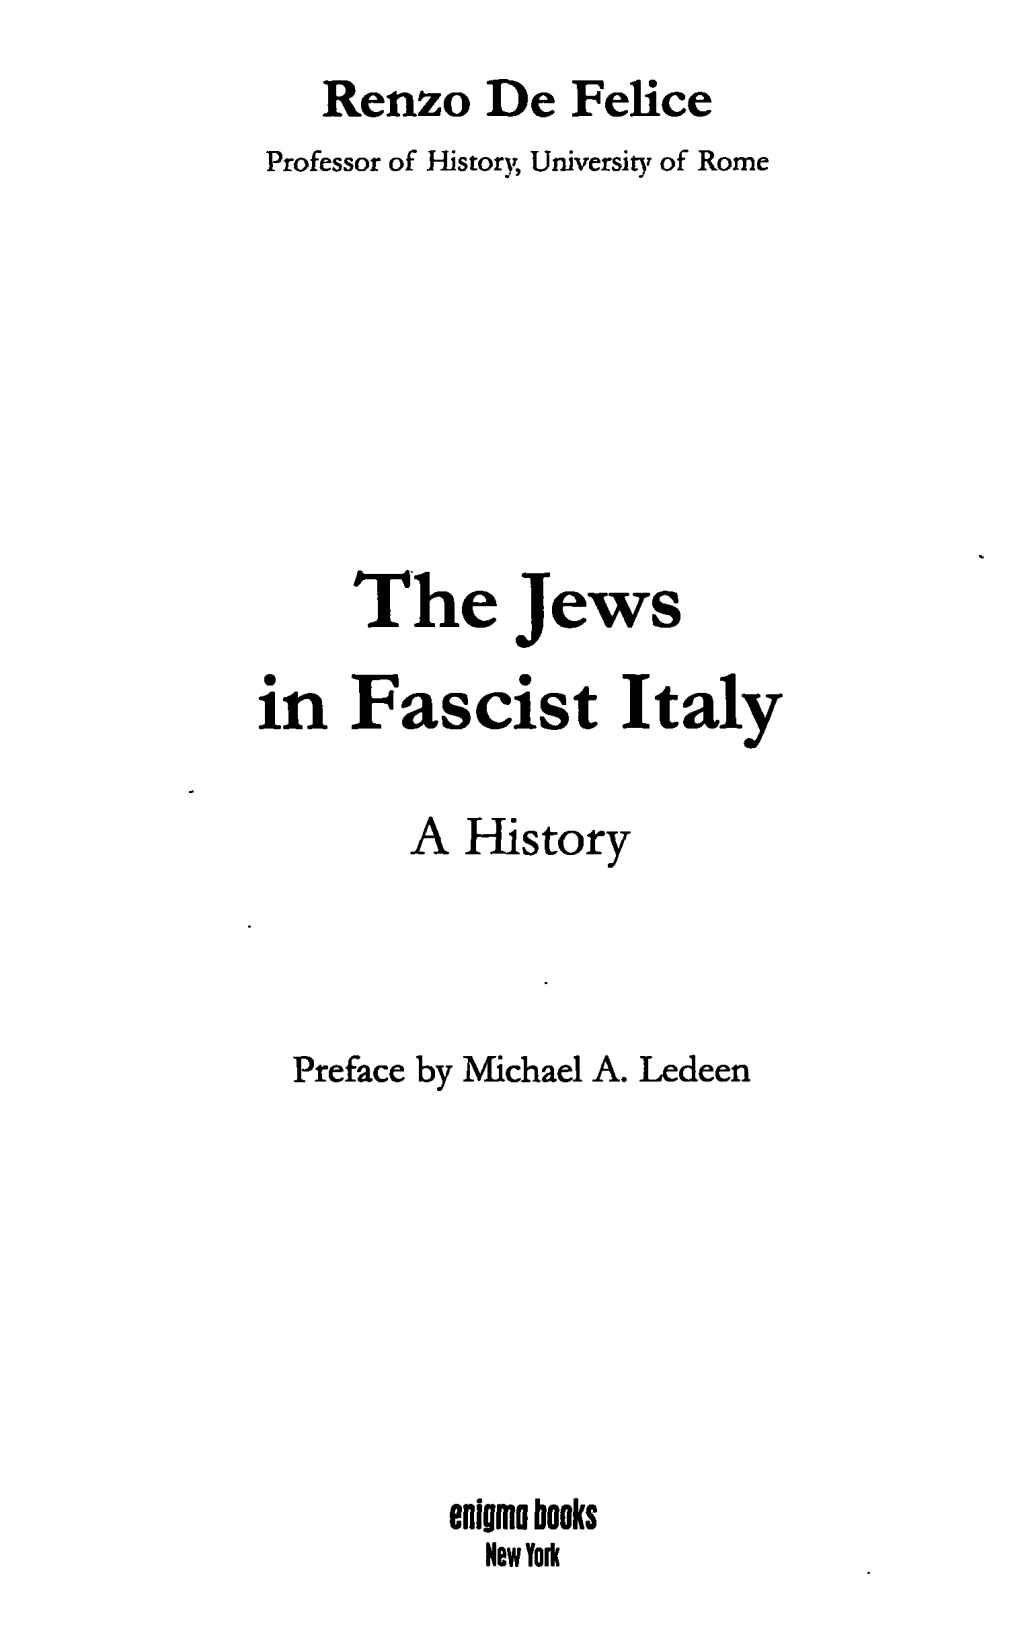 The Jews in Fascist Italy